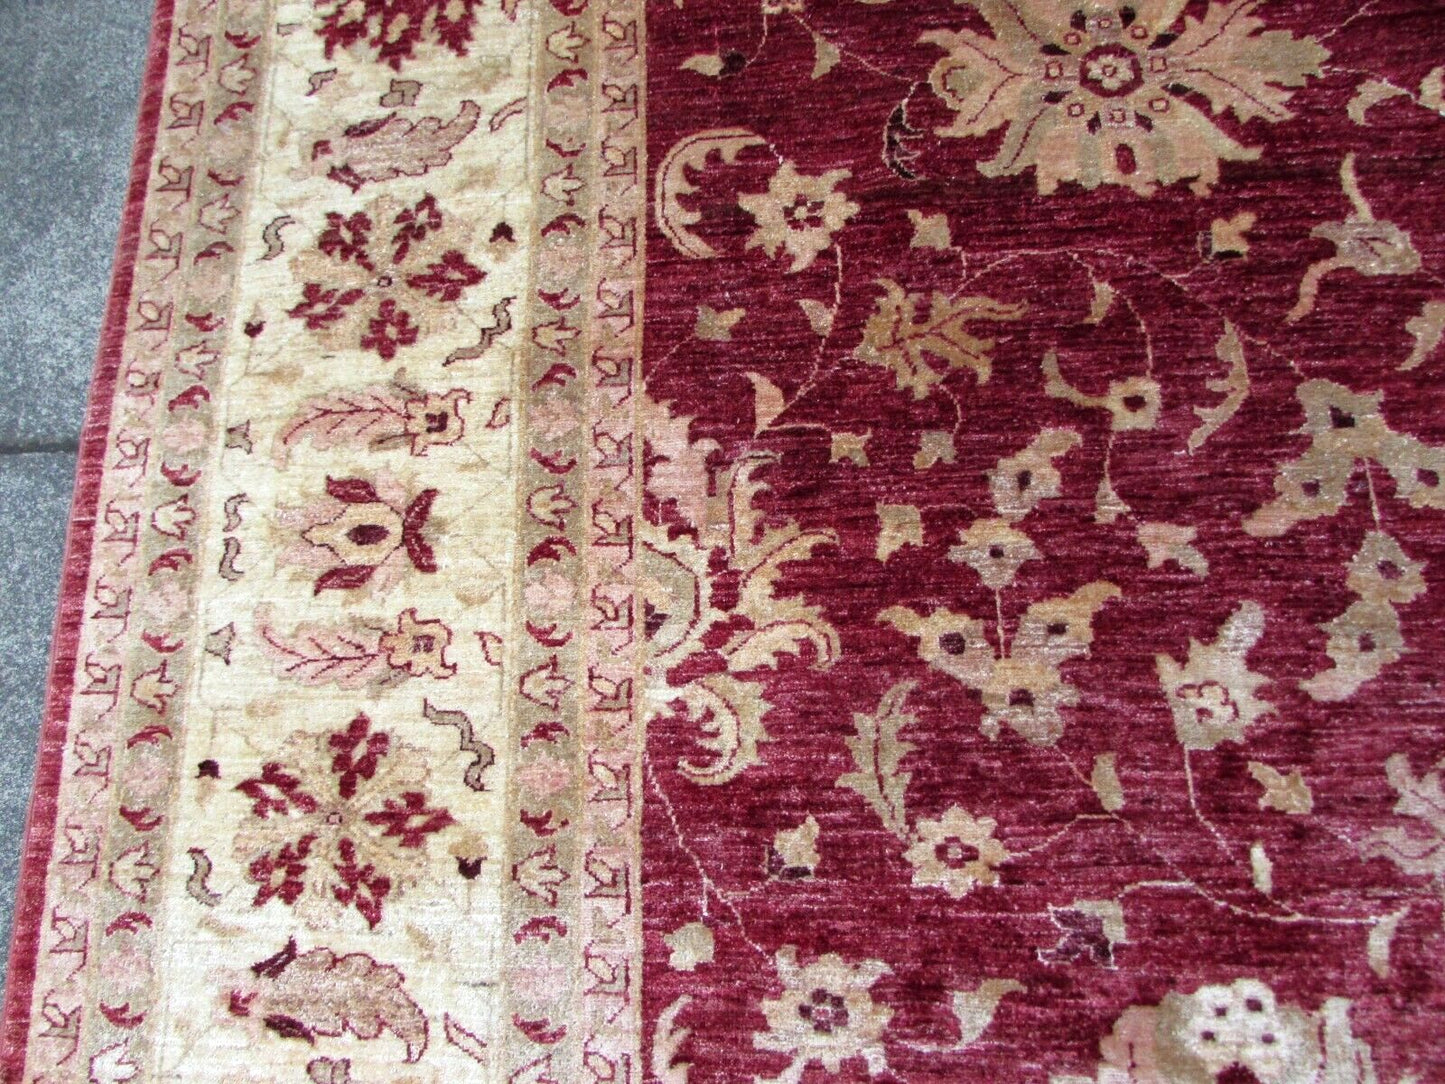 Fine details of the rug's craftsmanship and weaving